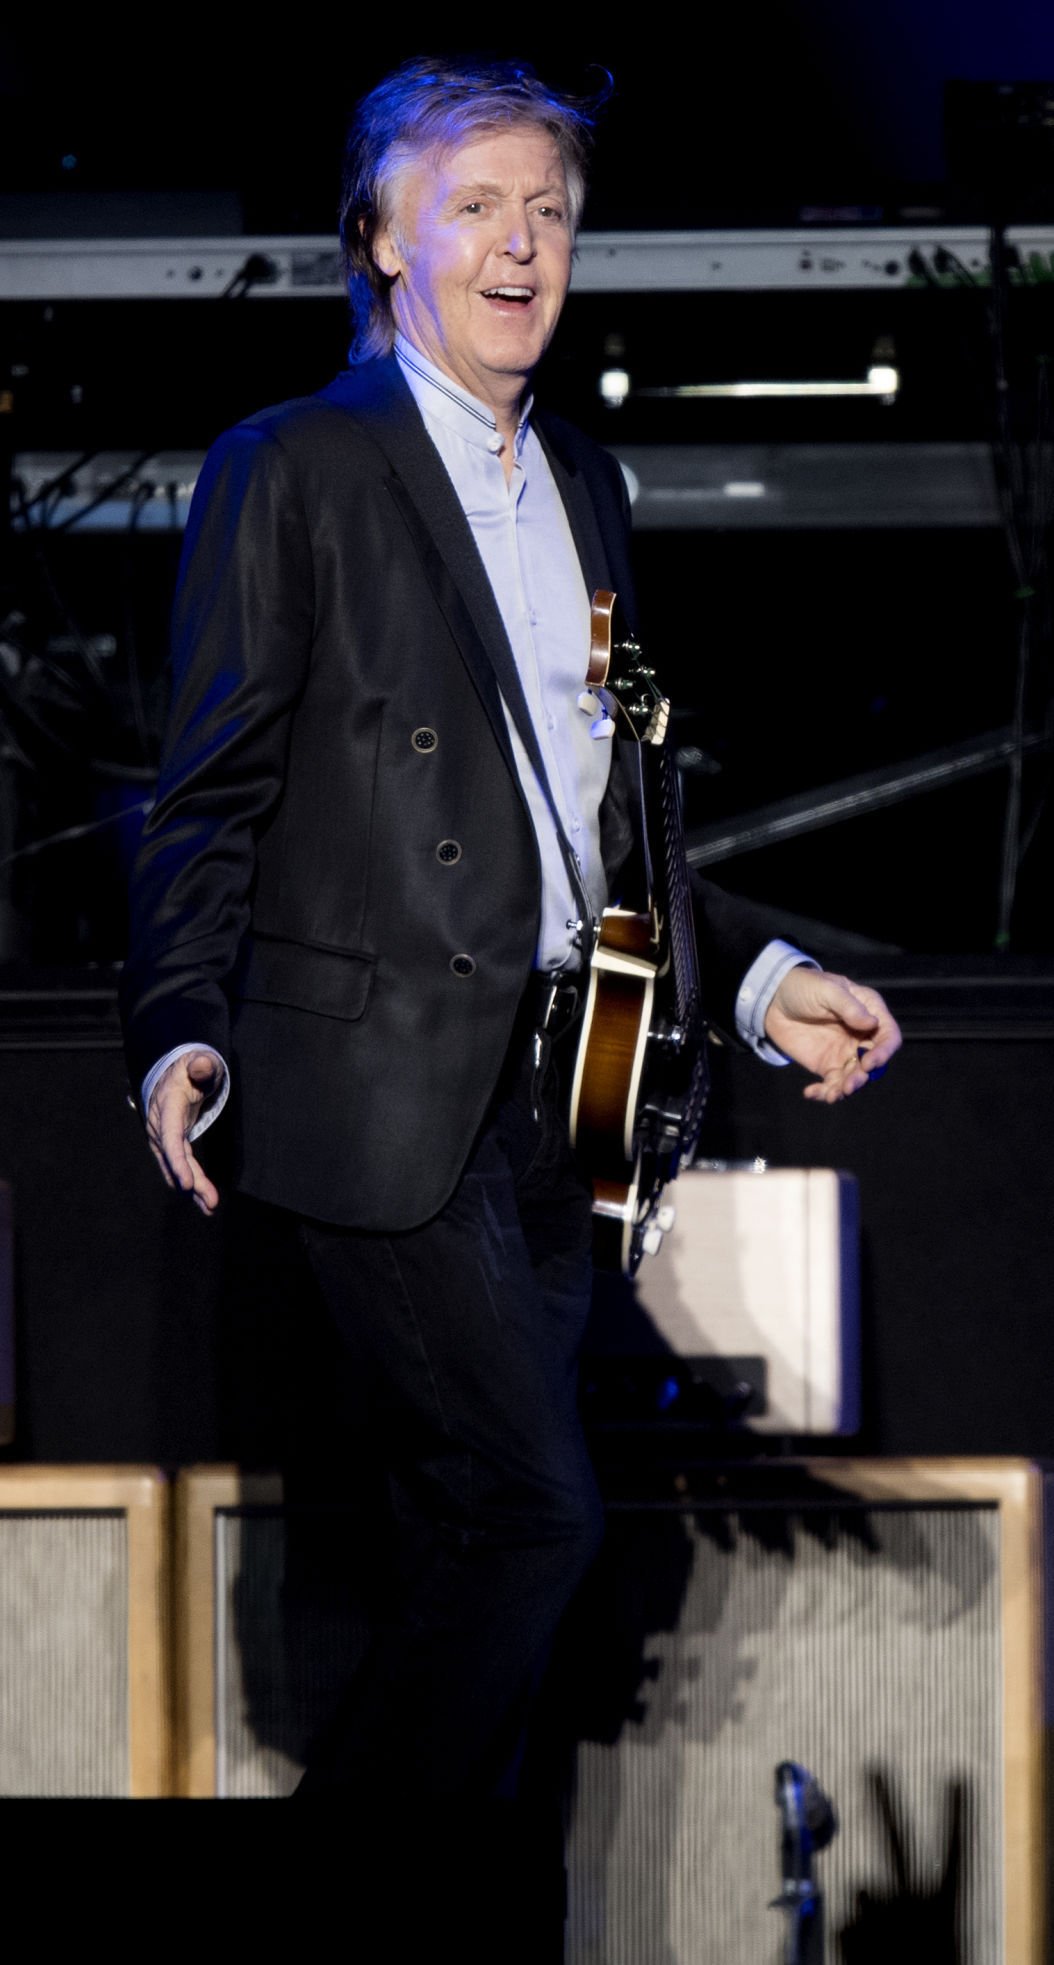 Paul McCartney at the CenturyLink Center in Omaha